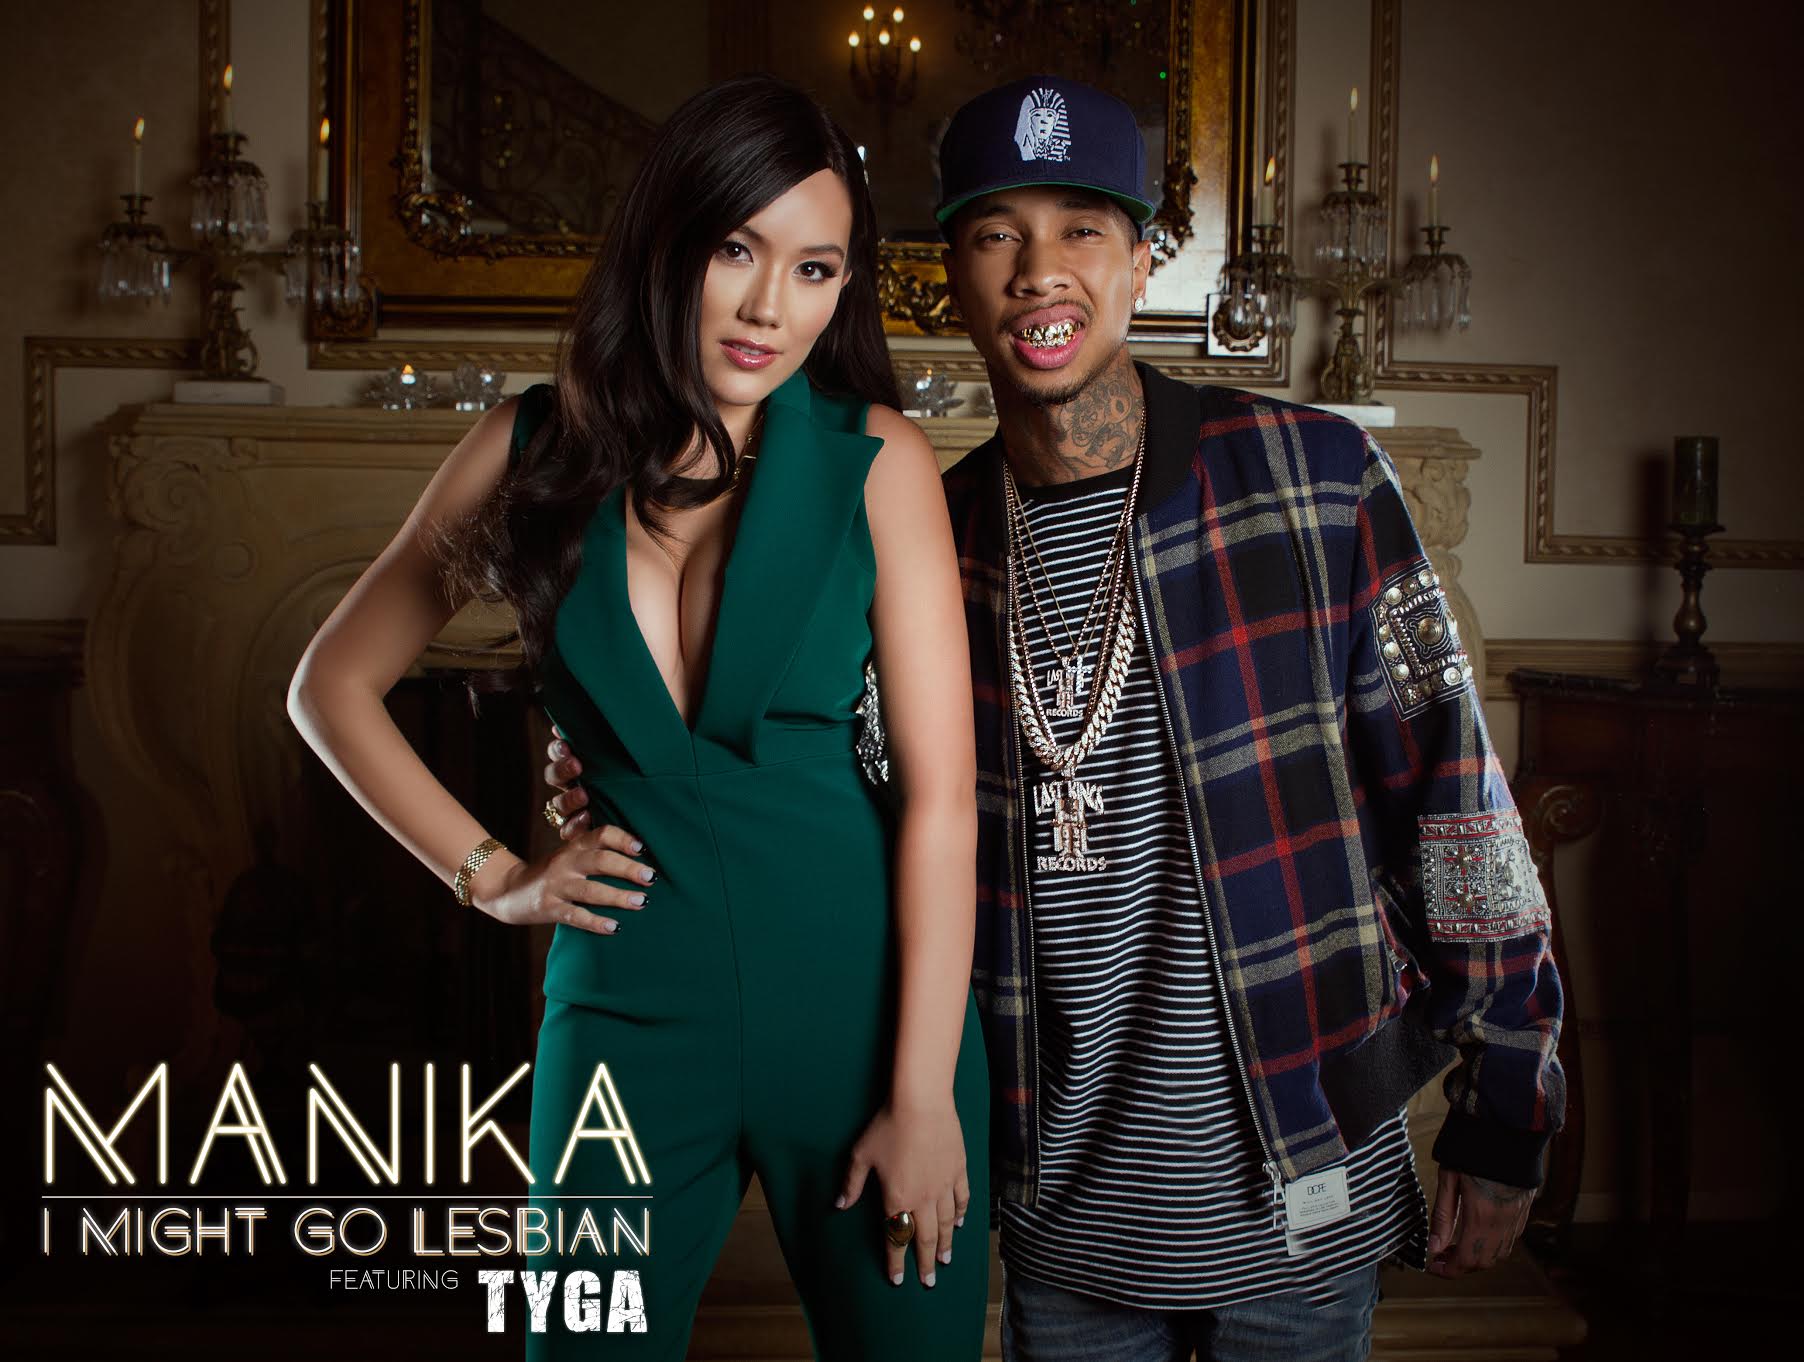 Manika - I Might Go Lesbian featuring Tyga